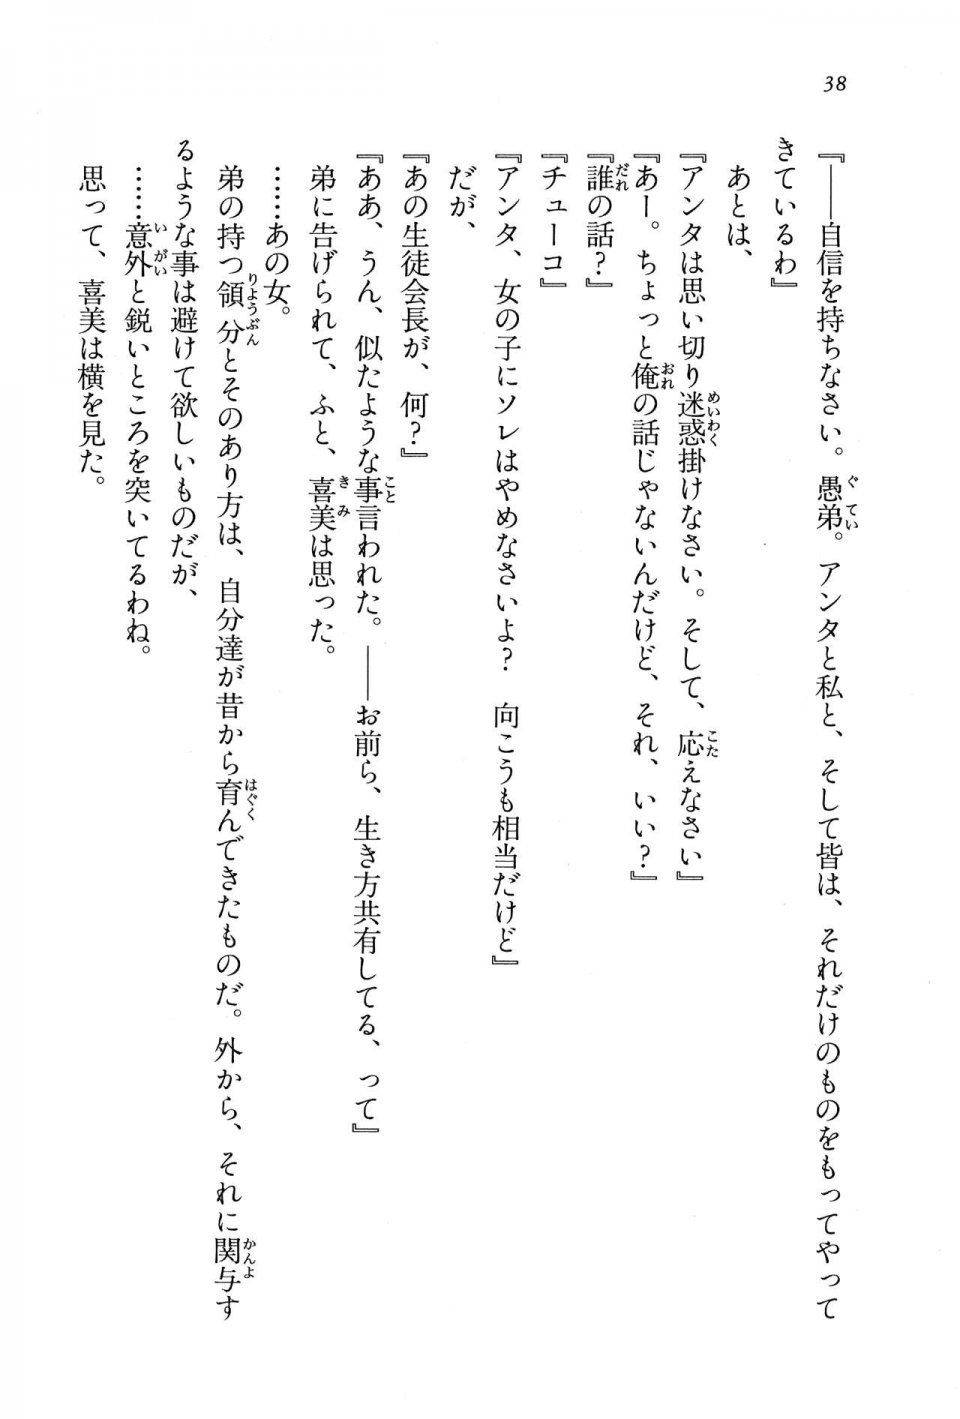 Kyoukai Senjou no Horizon BD Special Mininovel Vol 7(4A) - Photo #42